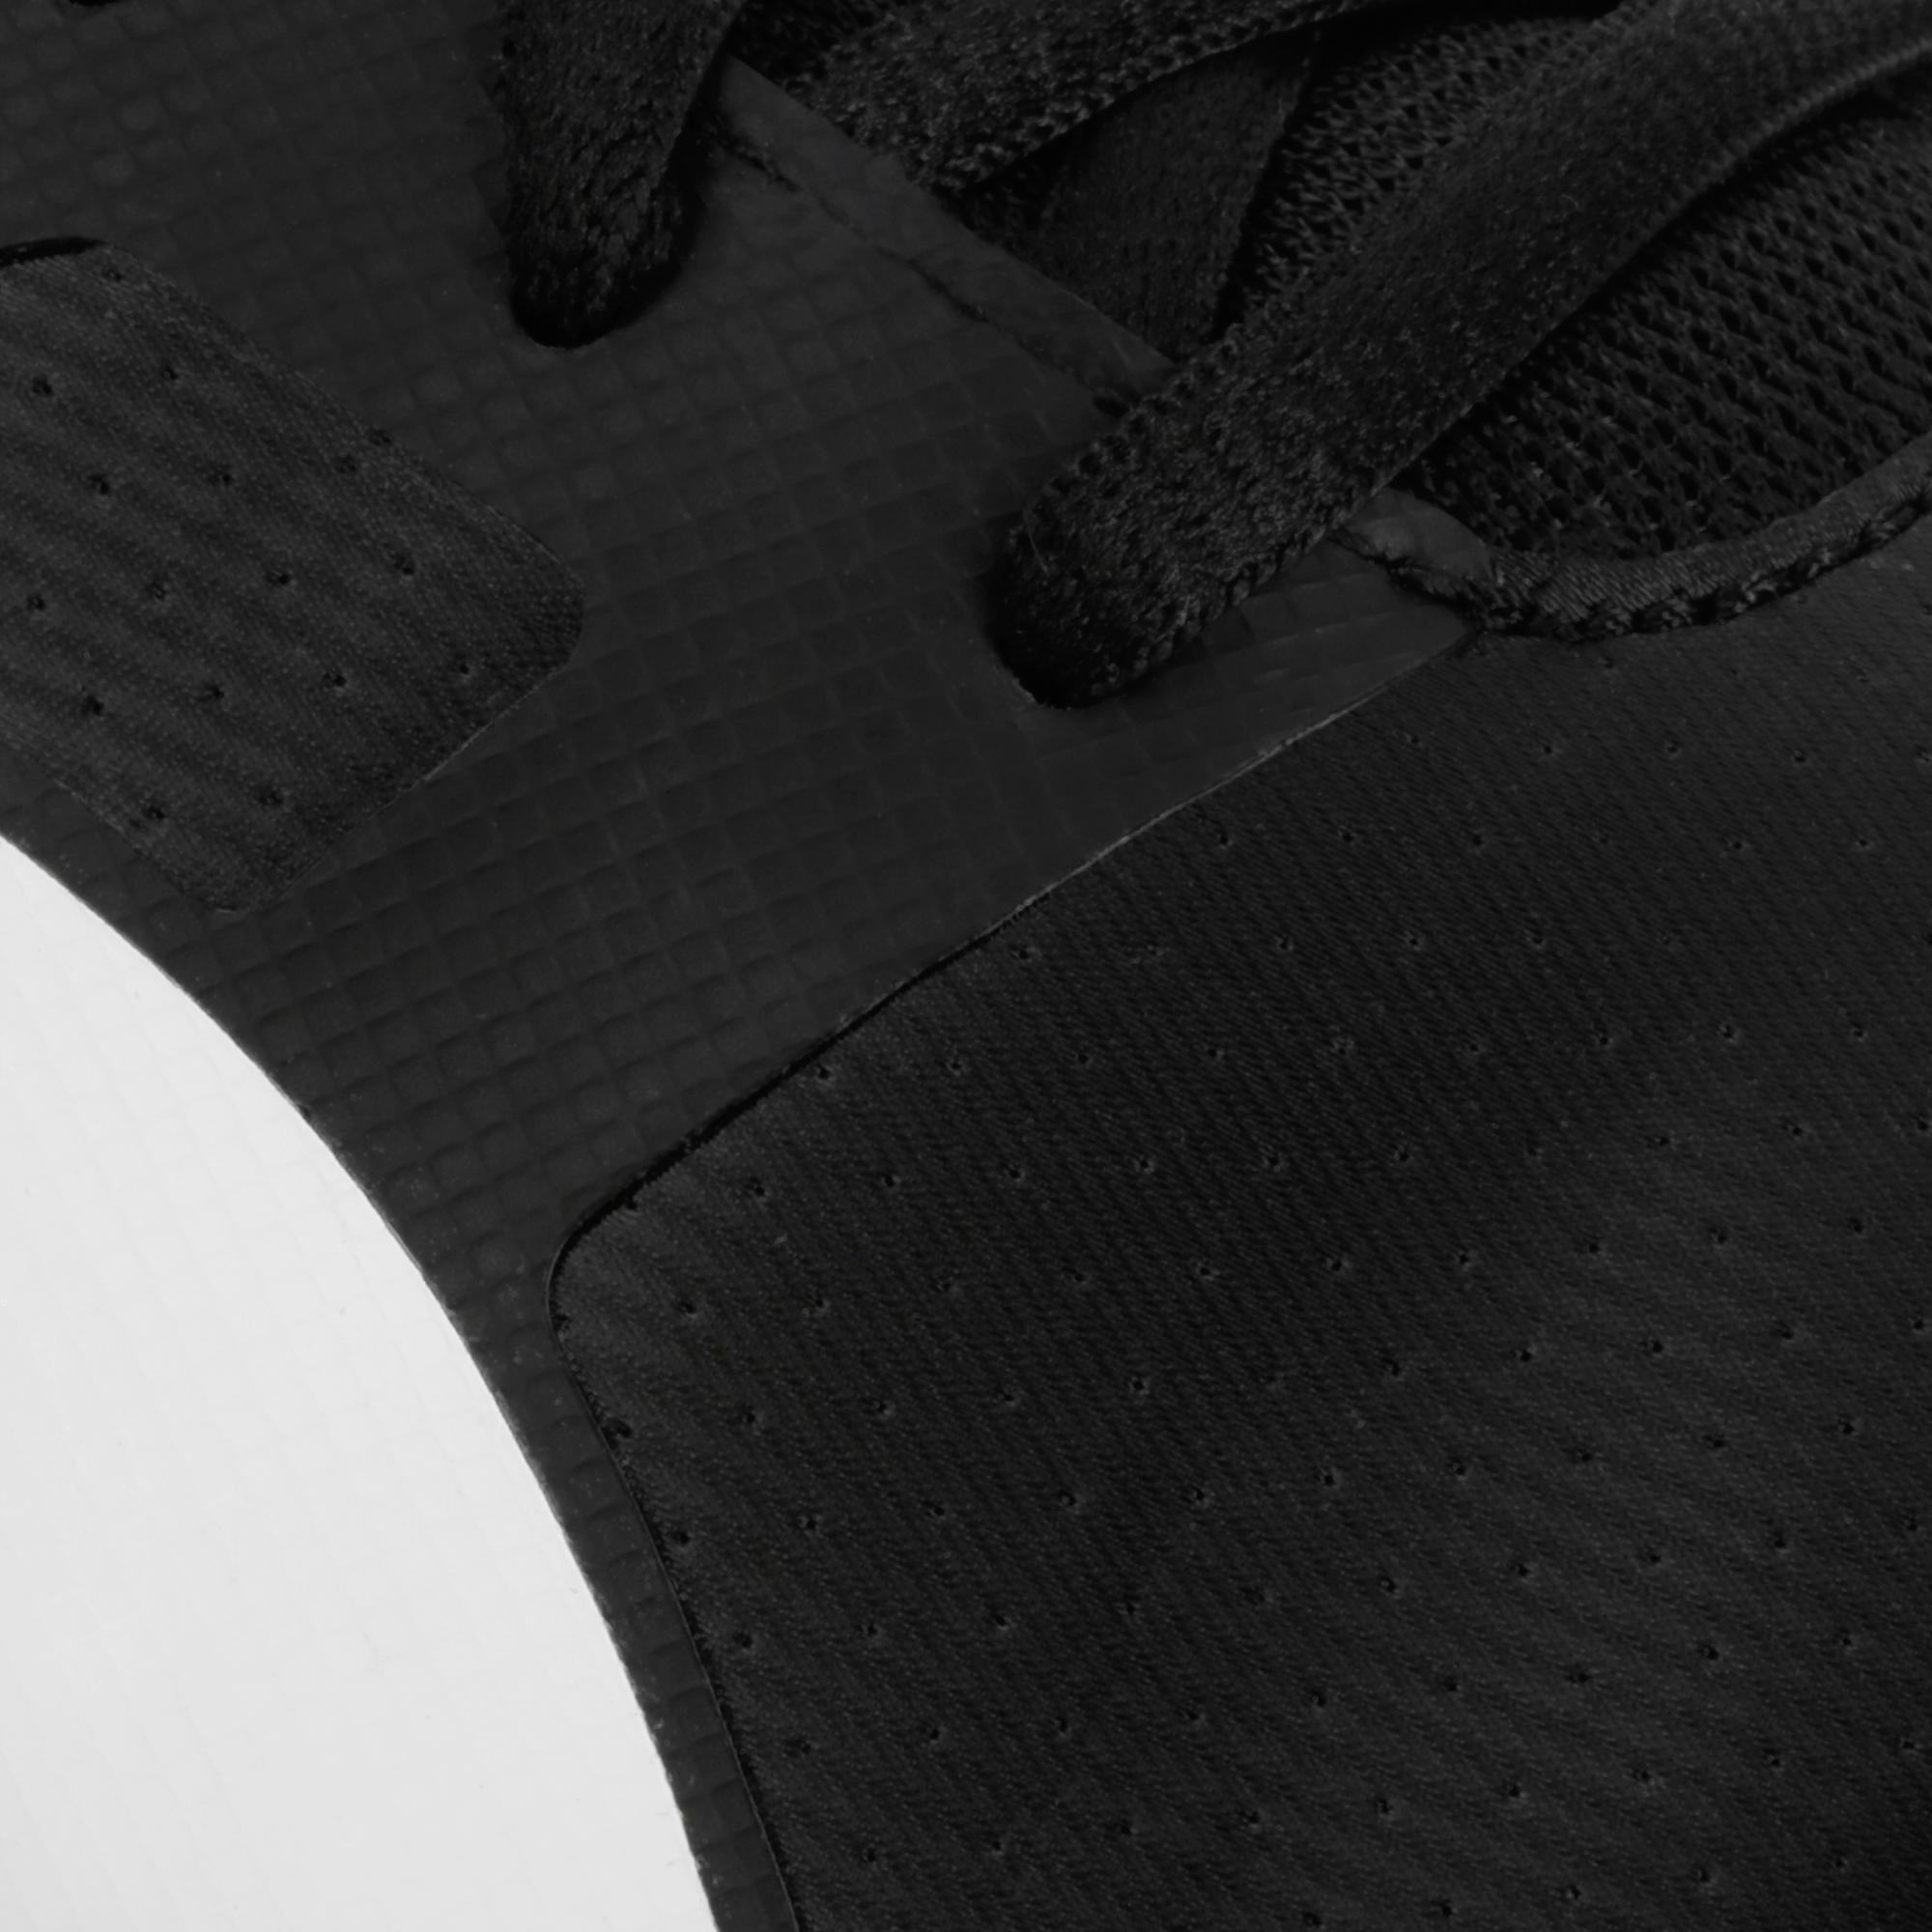 Flexracer men's active walking shoes - black 8/9